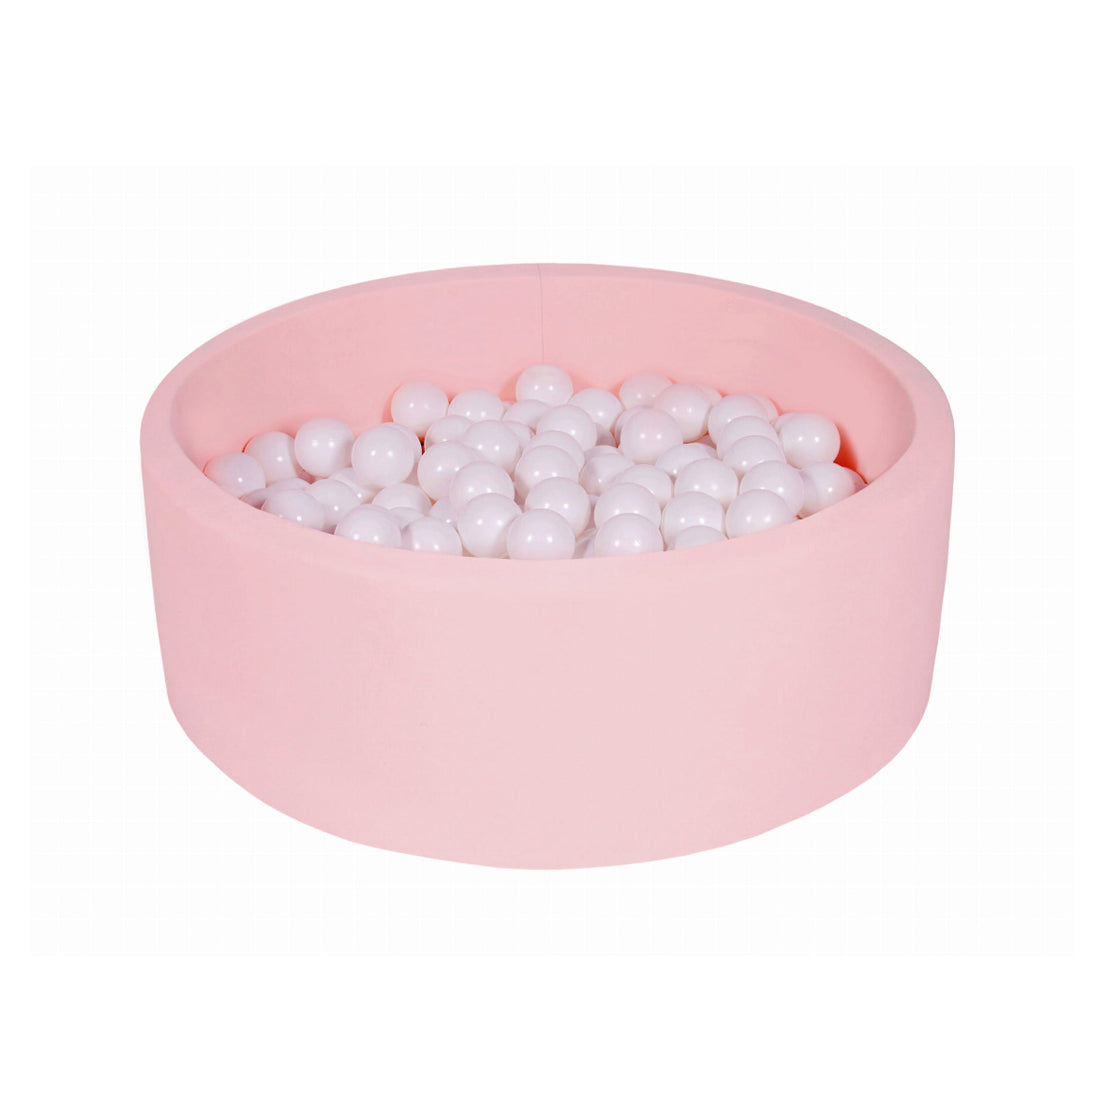 Cotton Round Ball Pit, Pink